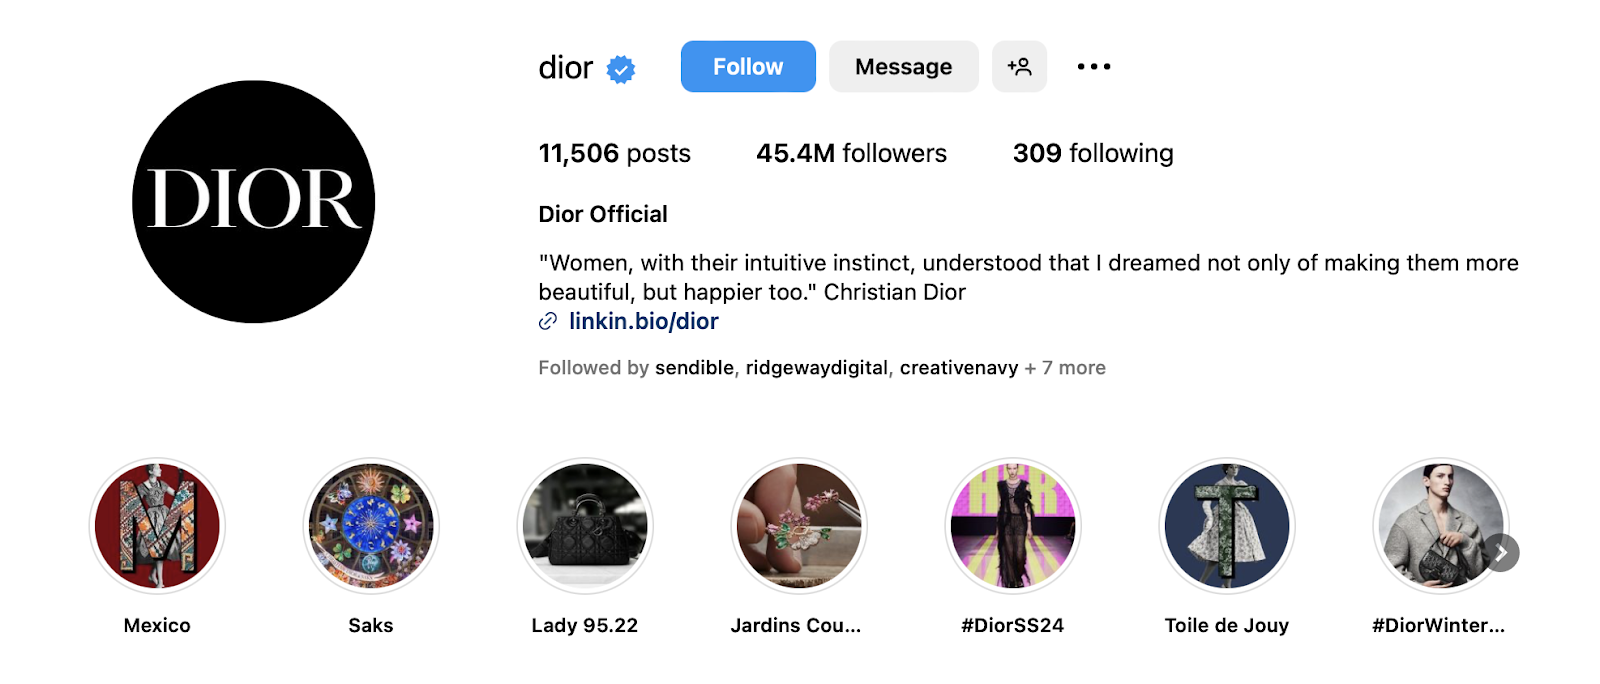 Dior's Instagram marketing strategy